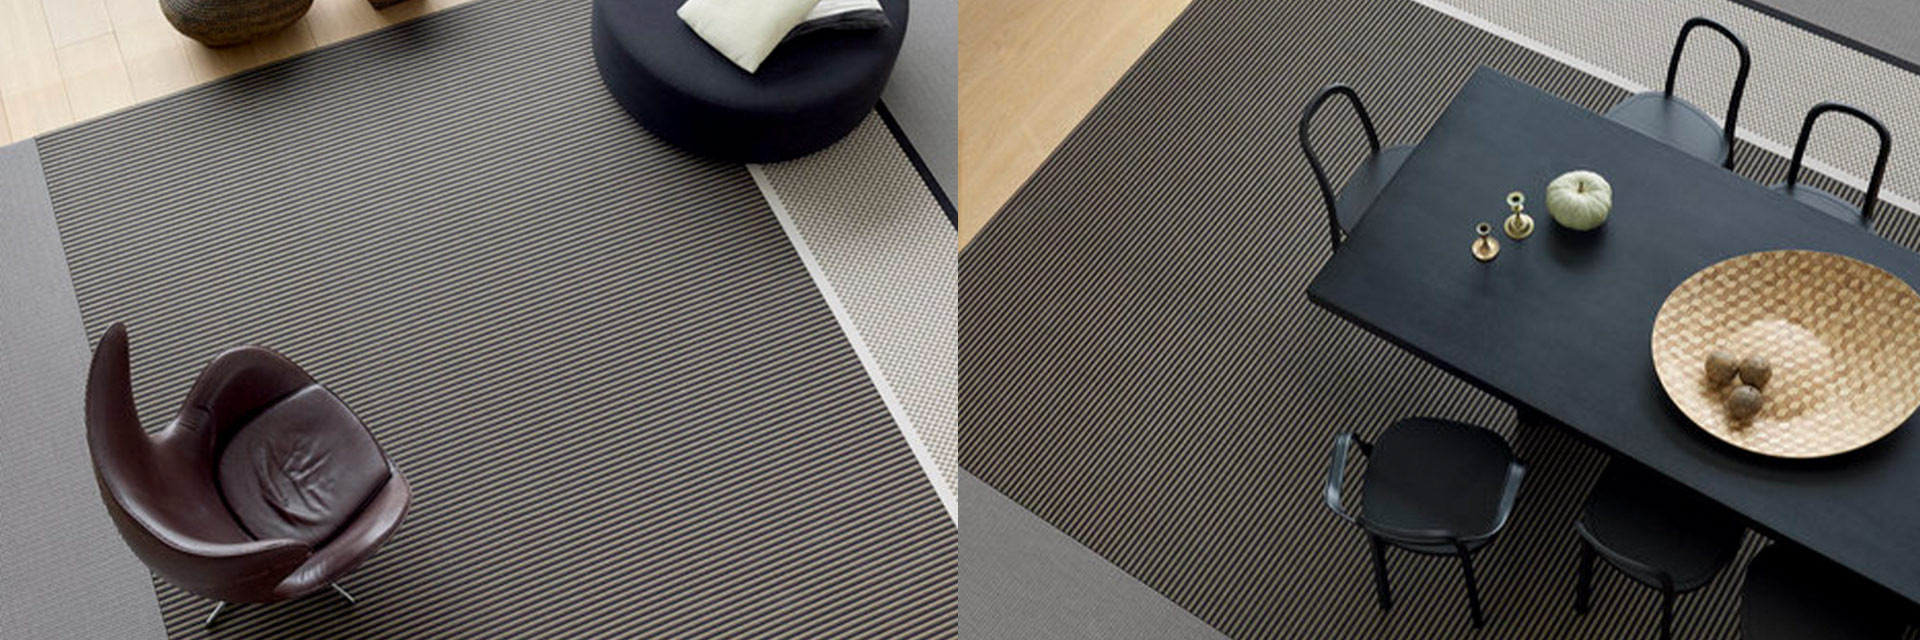 Scandinavian design carpet and rug - La boutique danoise